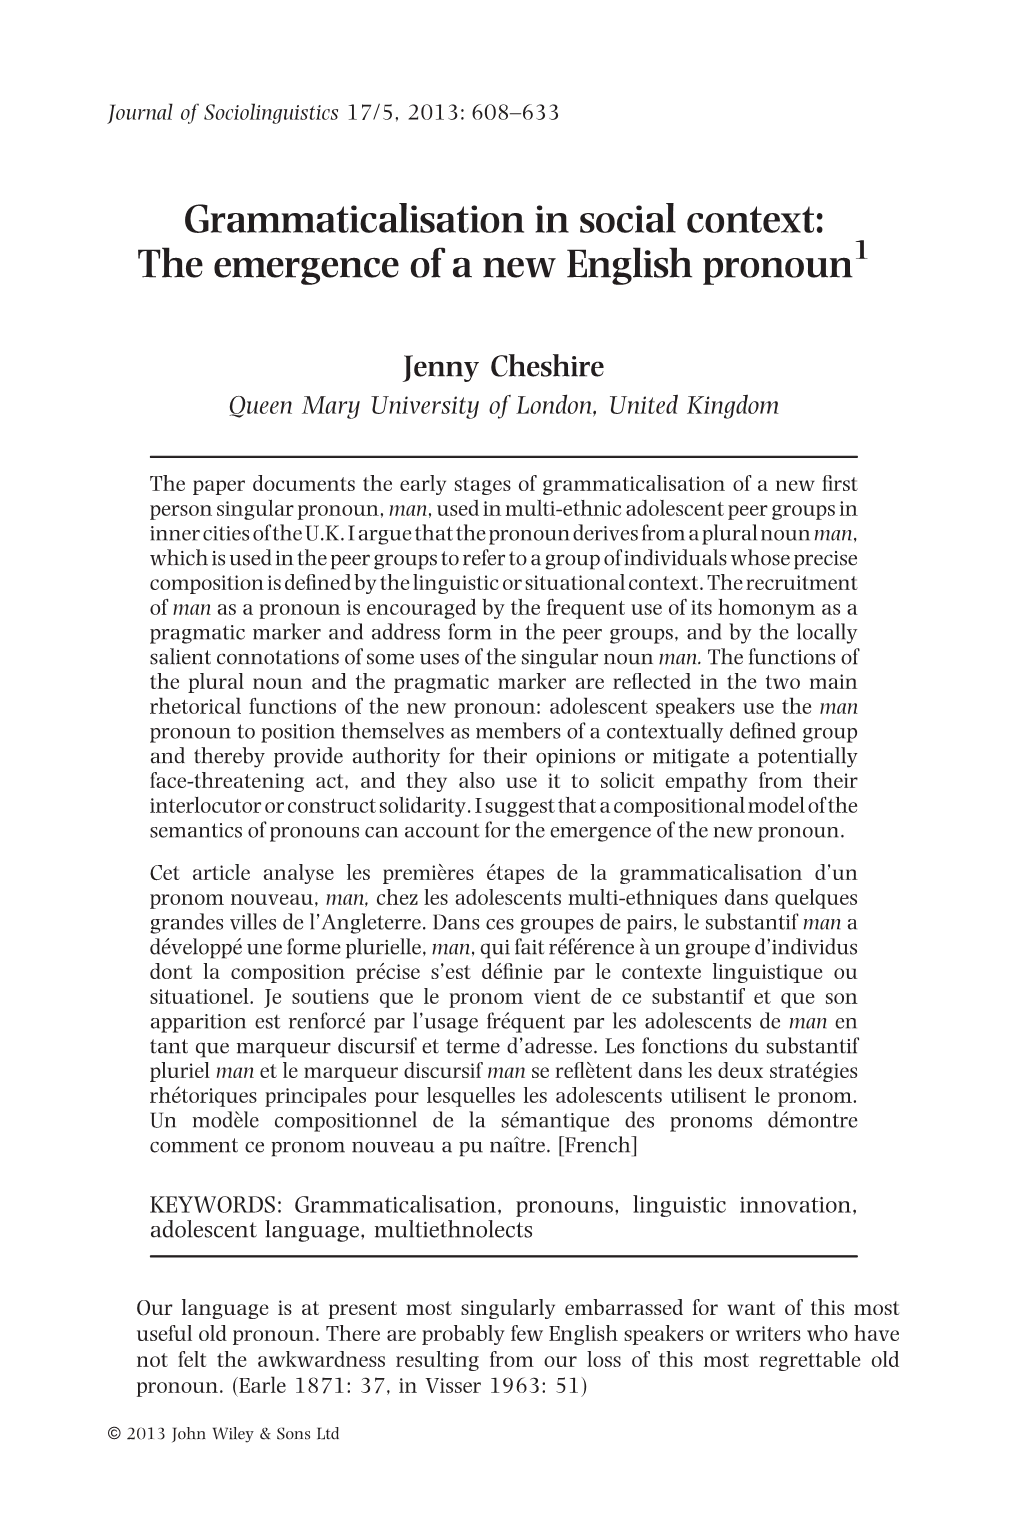 The Emergence of a New English Pronoun1